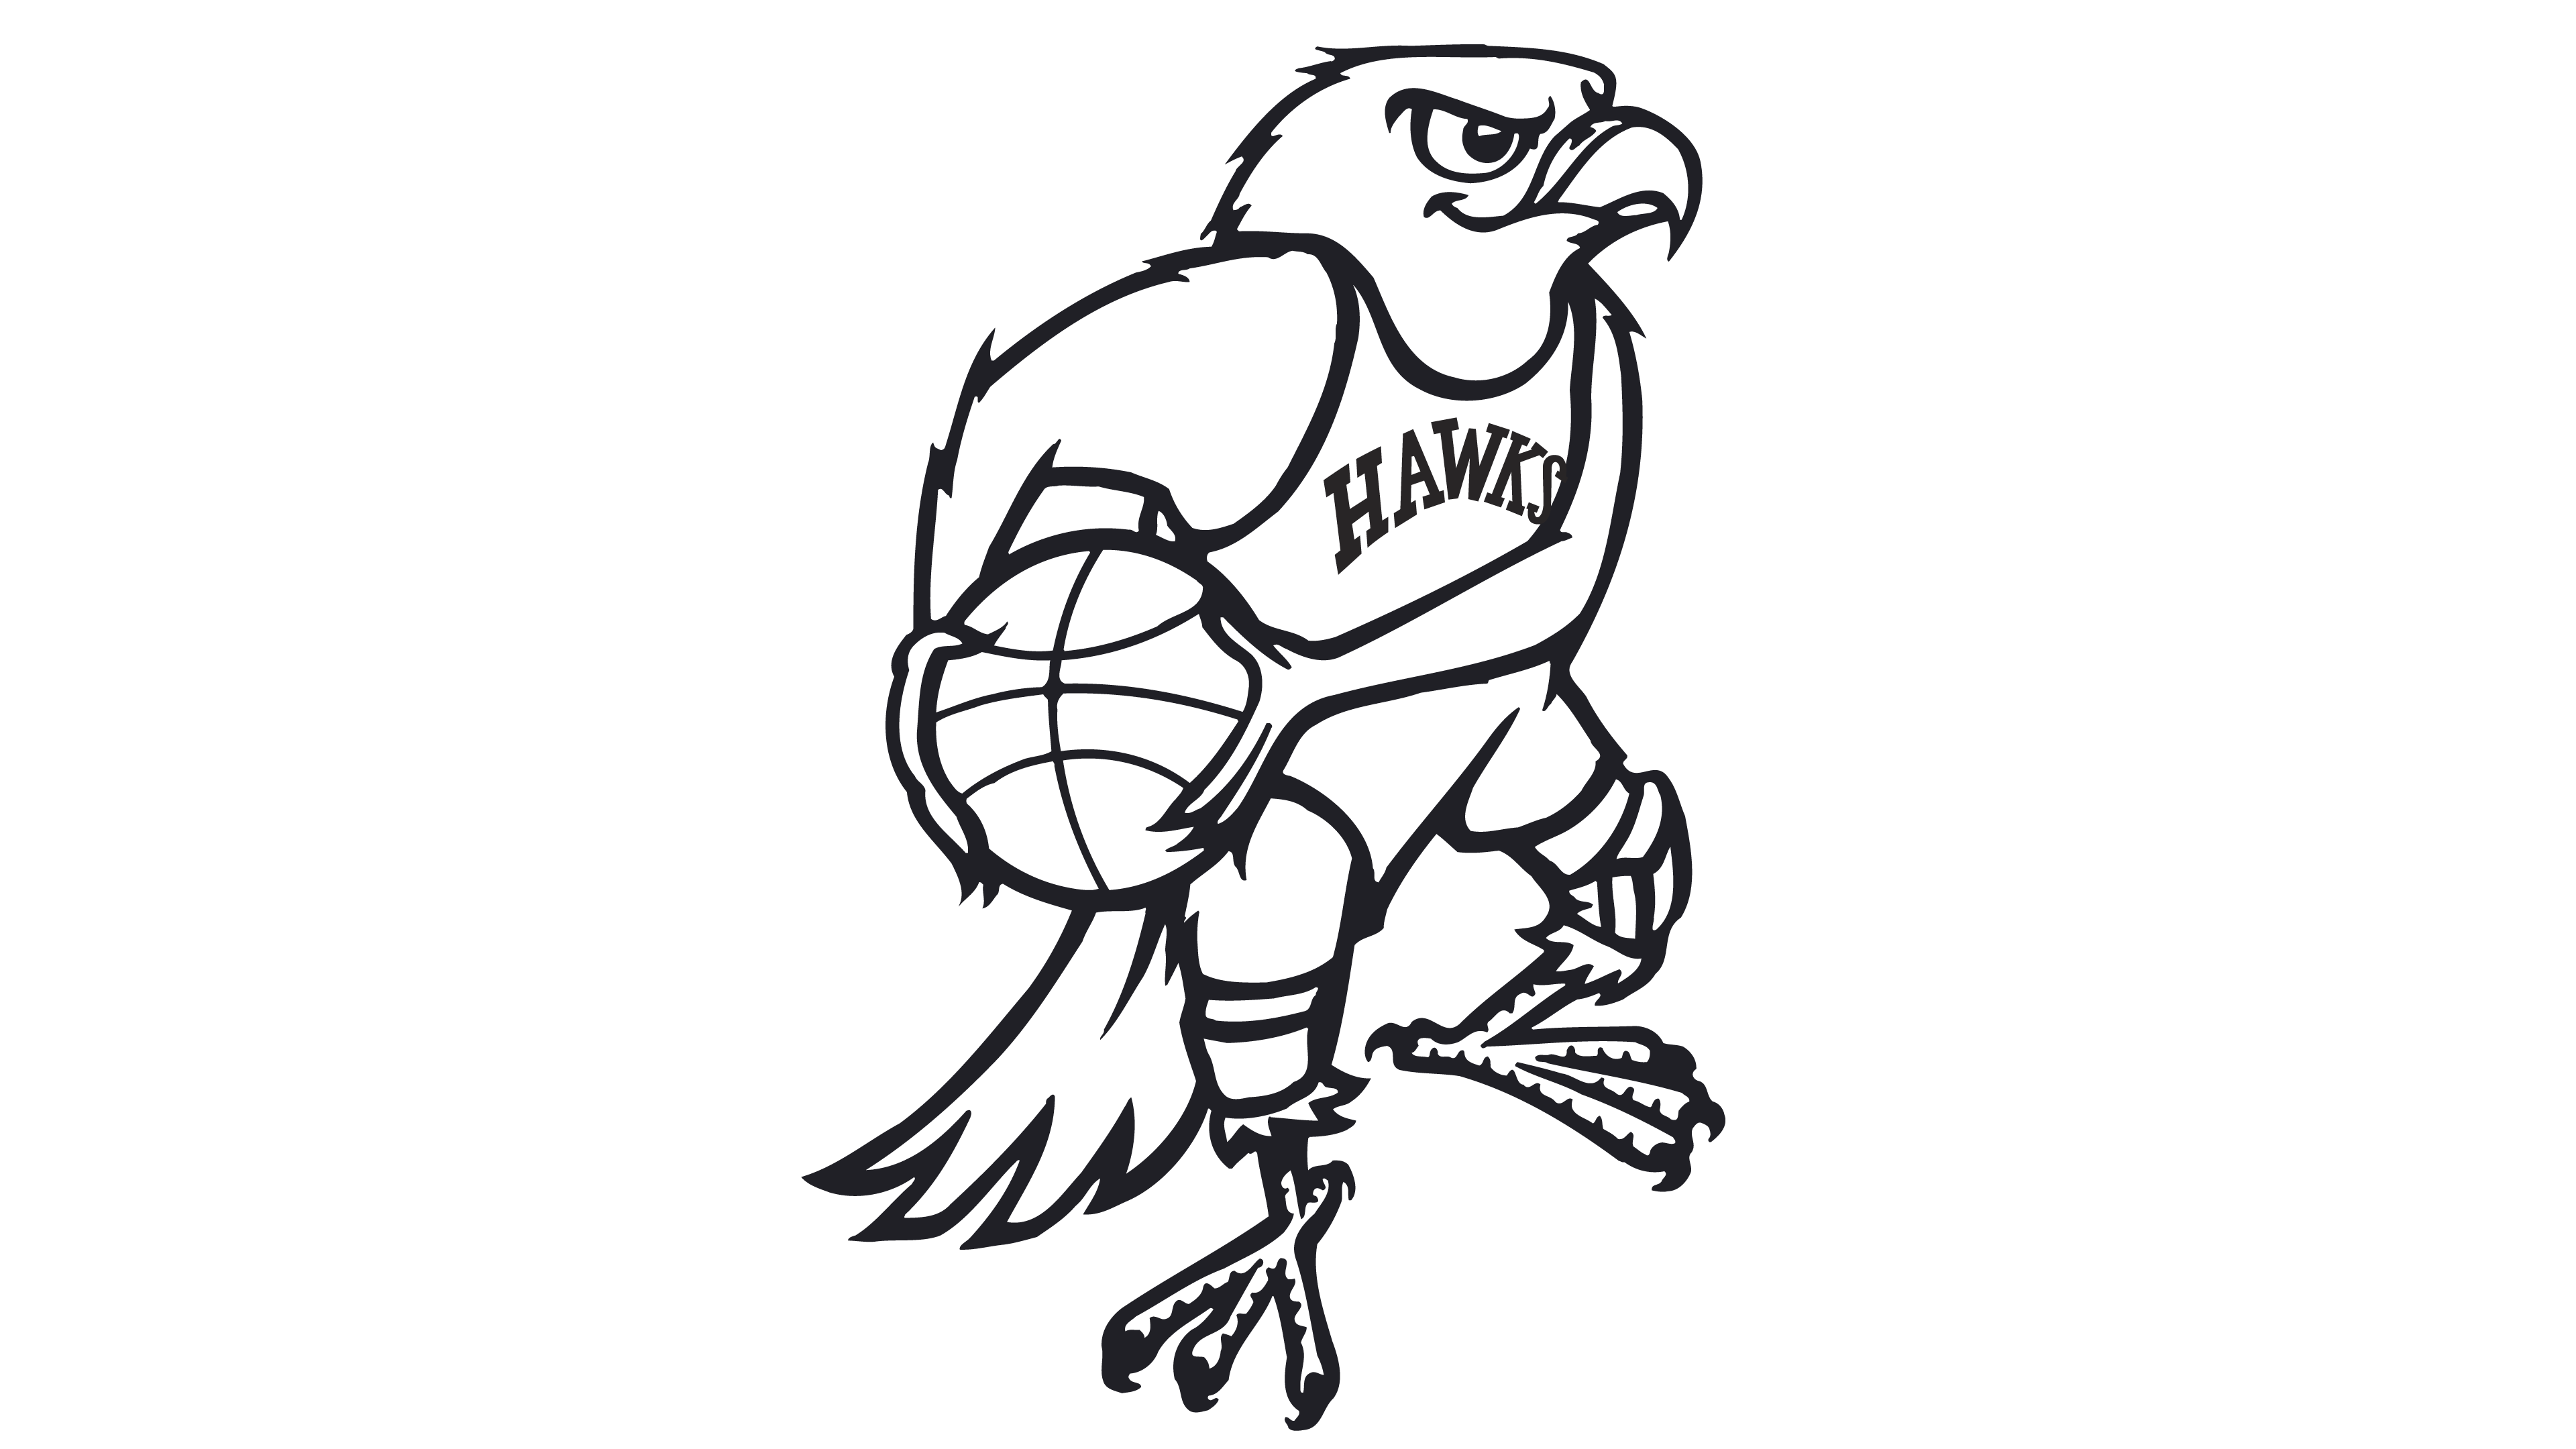 White Hawks Logo - Atlanta Hawks Logo - Interesting History of the Team Name and emblem